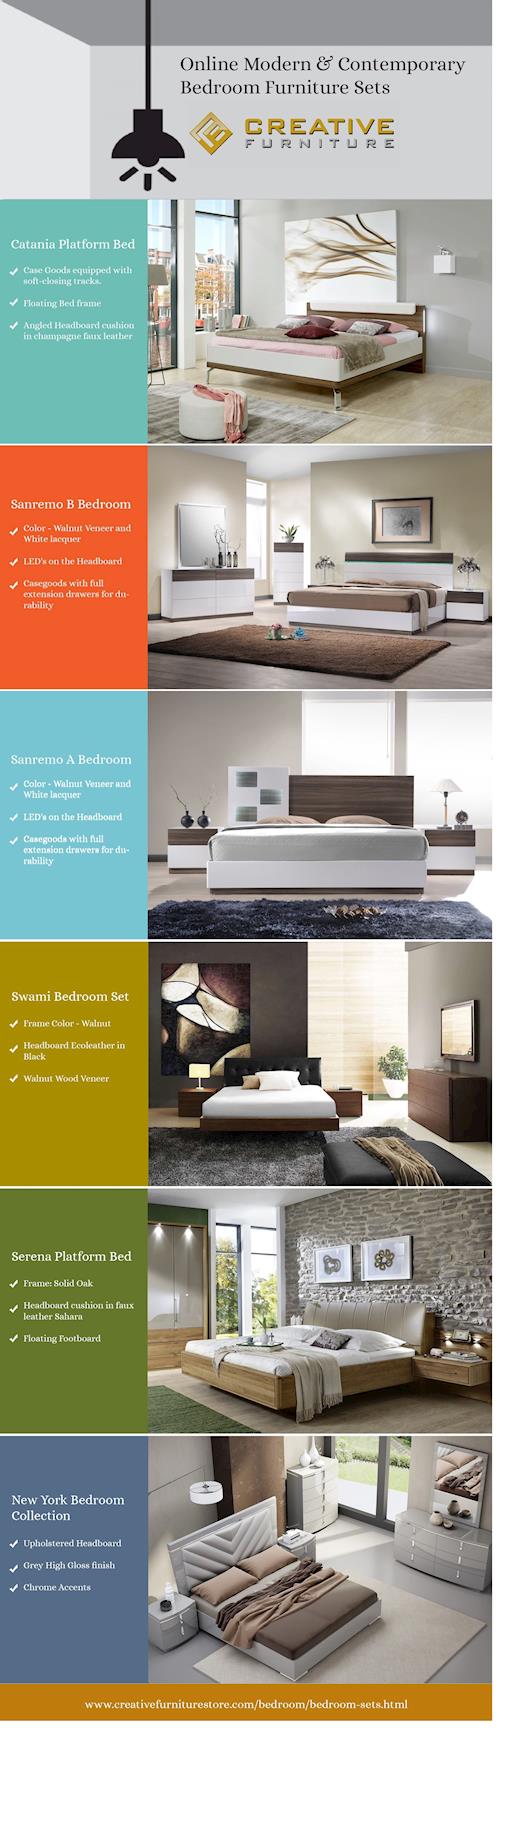 Online Modern & Contemporary Bedroom Furniture Sets